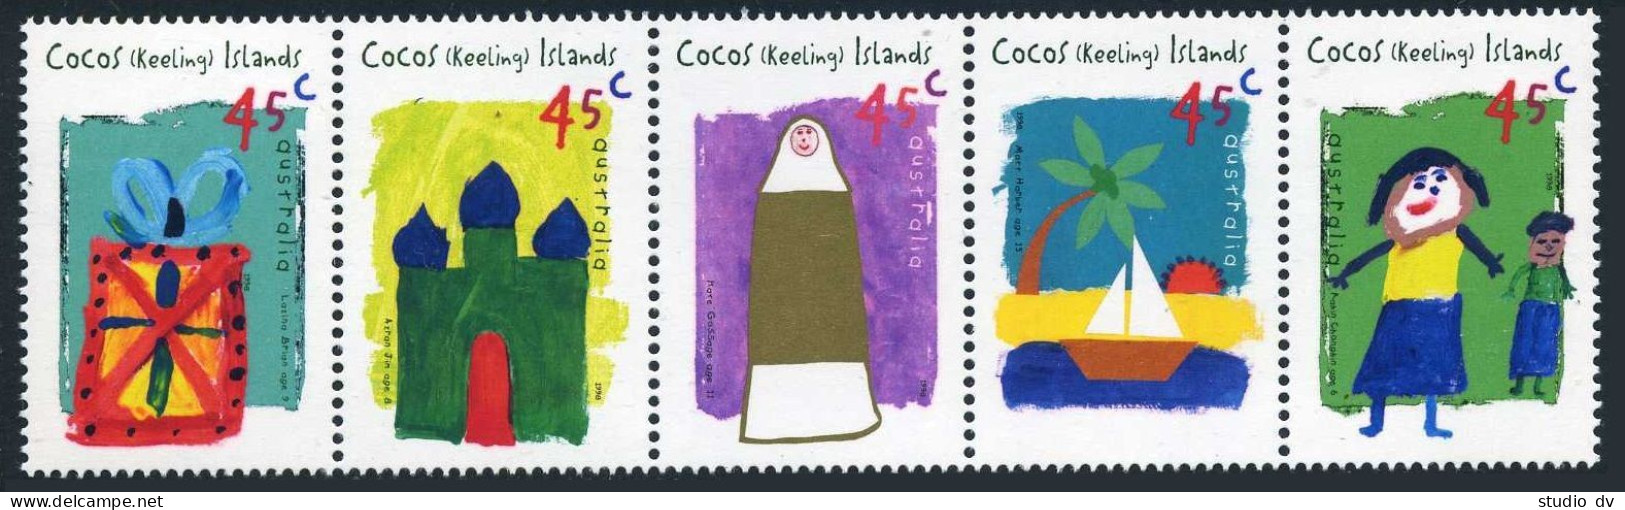 Cocos Islands 326 Ae Strip,MNH.Michel 362-366. Children Drawing,1998. - Kokosinseln (Keeling Islands)